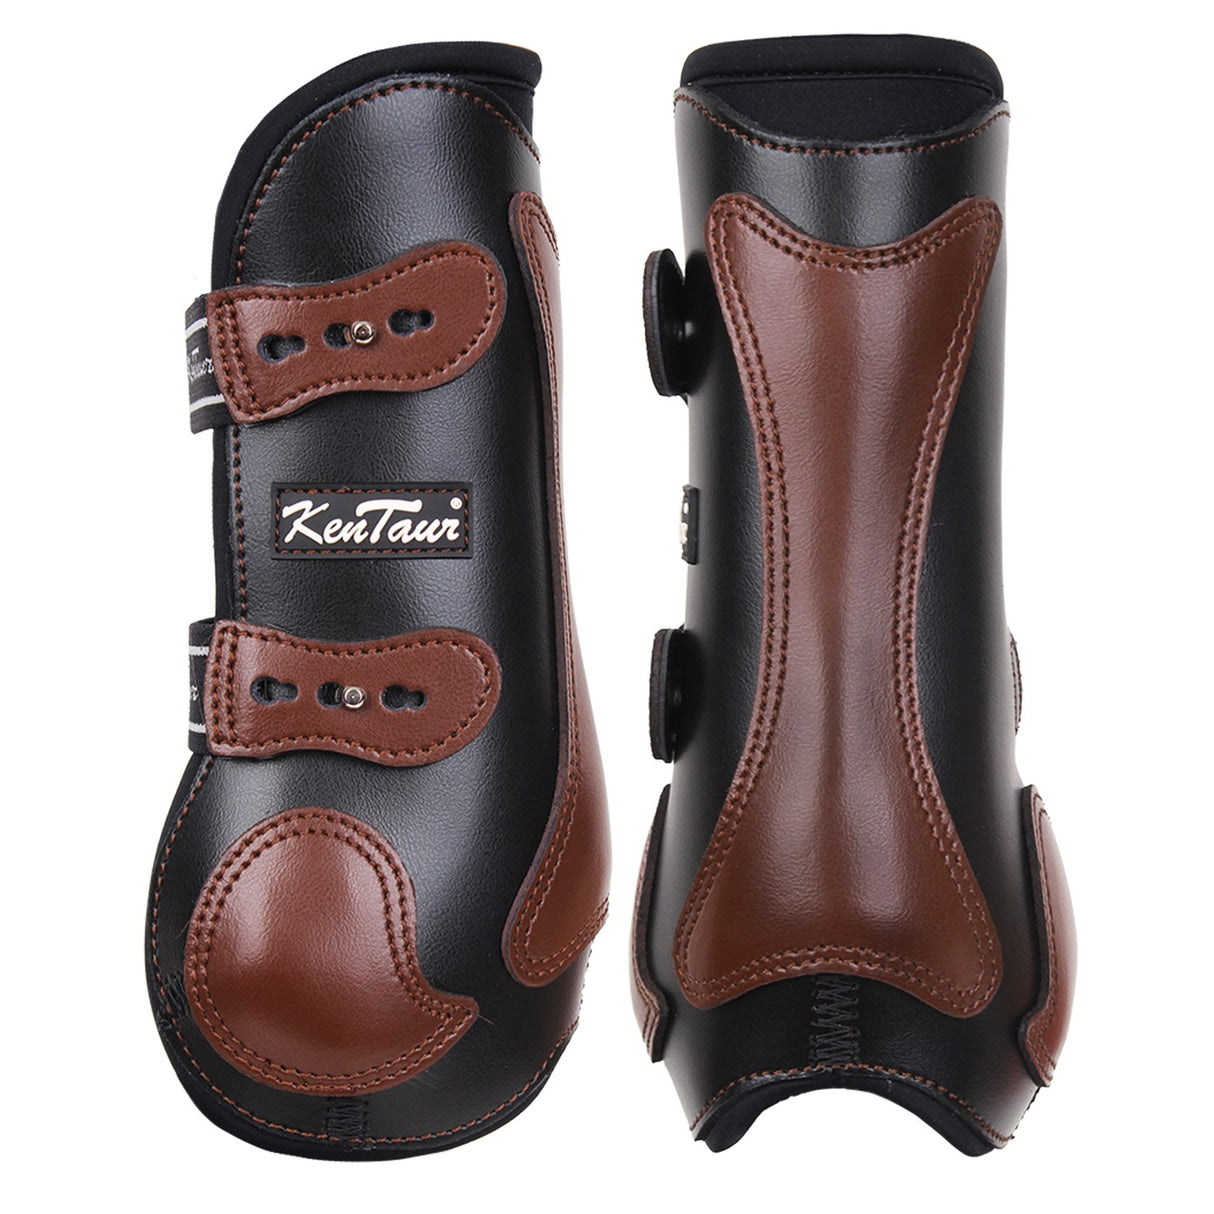 Kentaur Roma Leather Front Boots